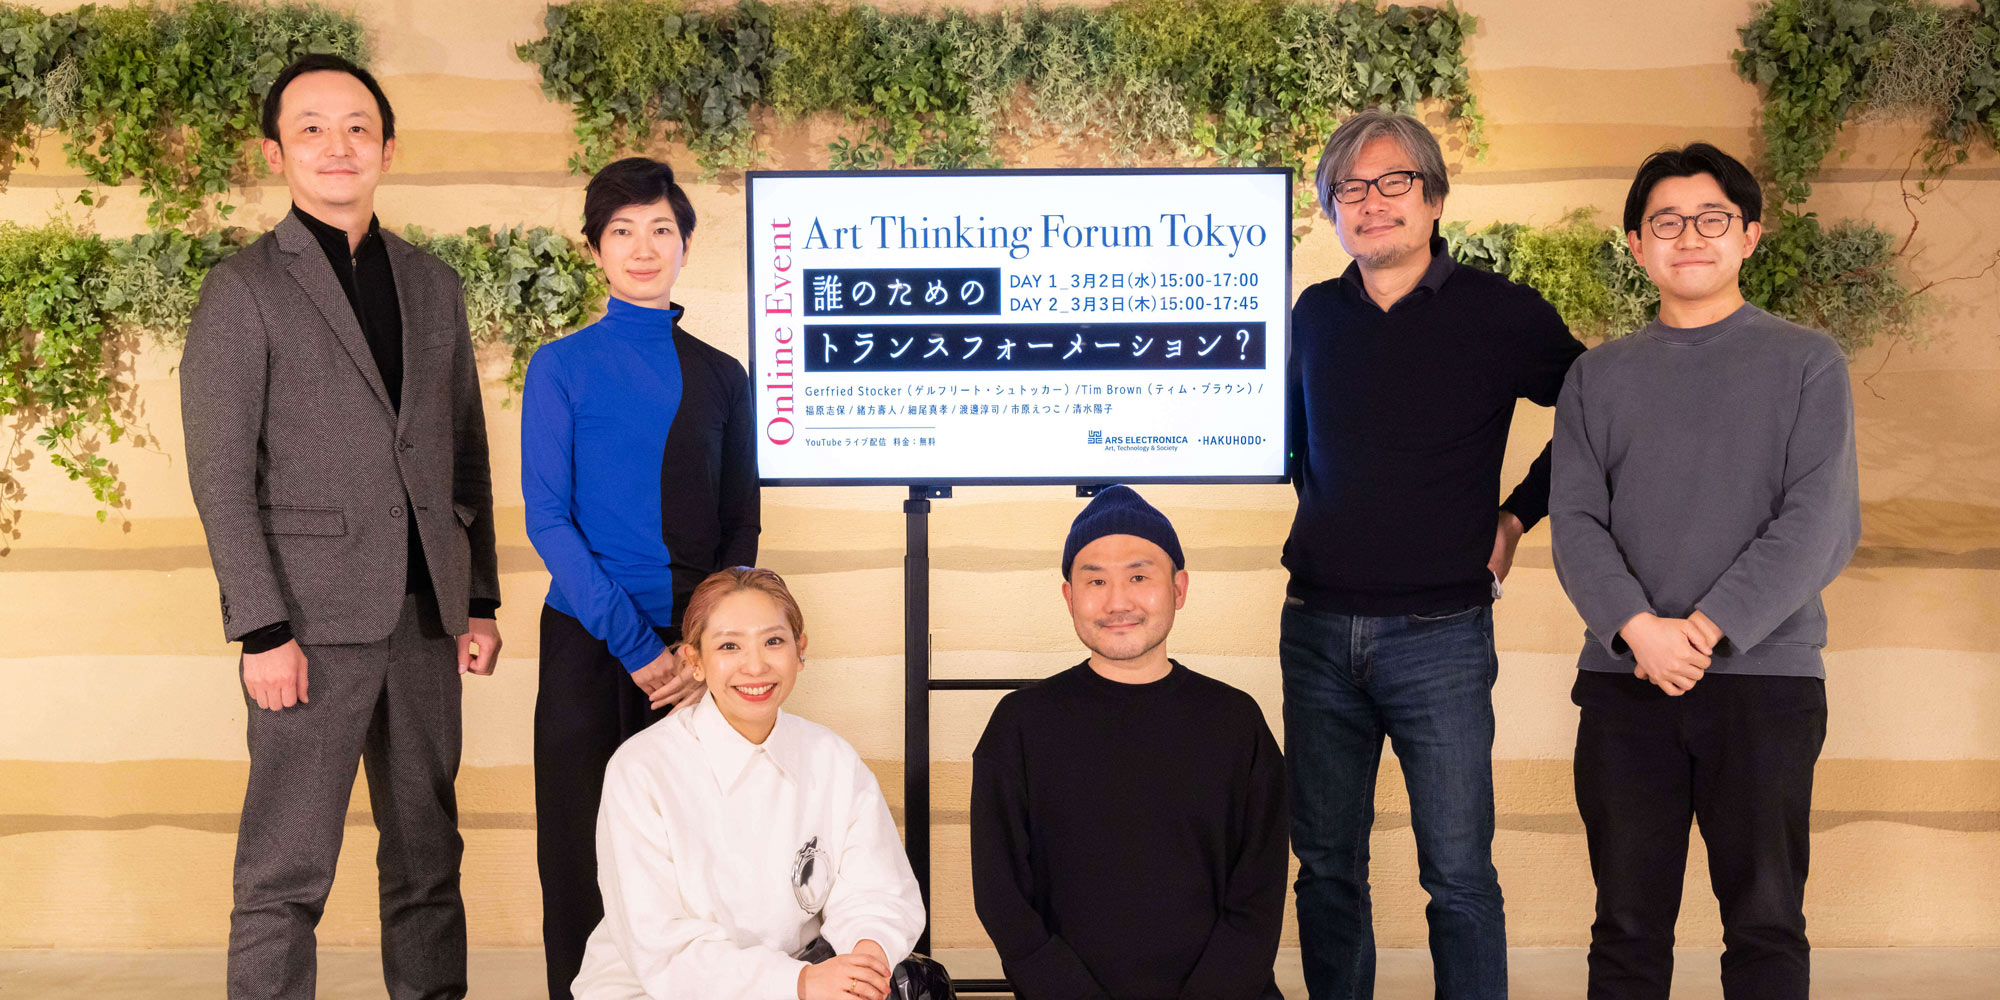 Art Thinking Forum Tokyo